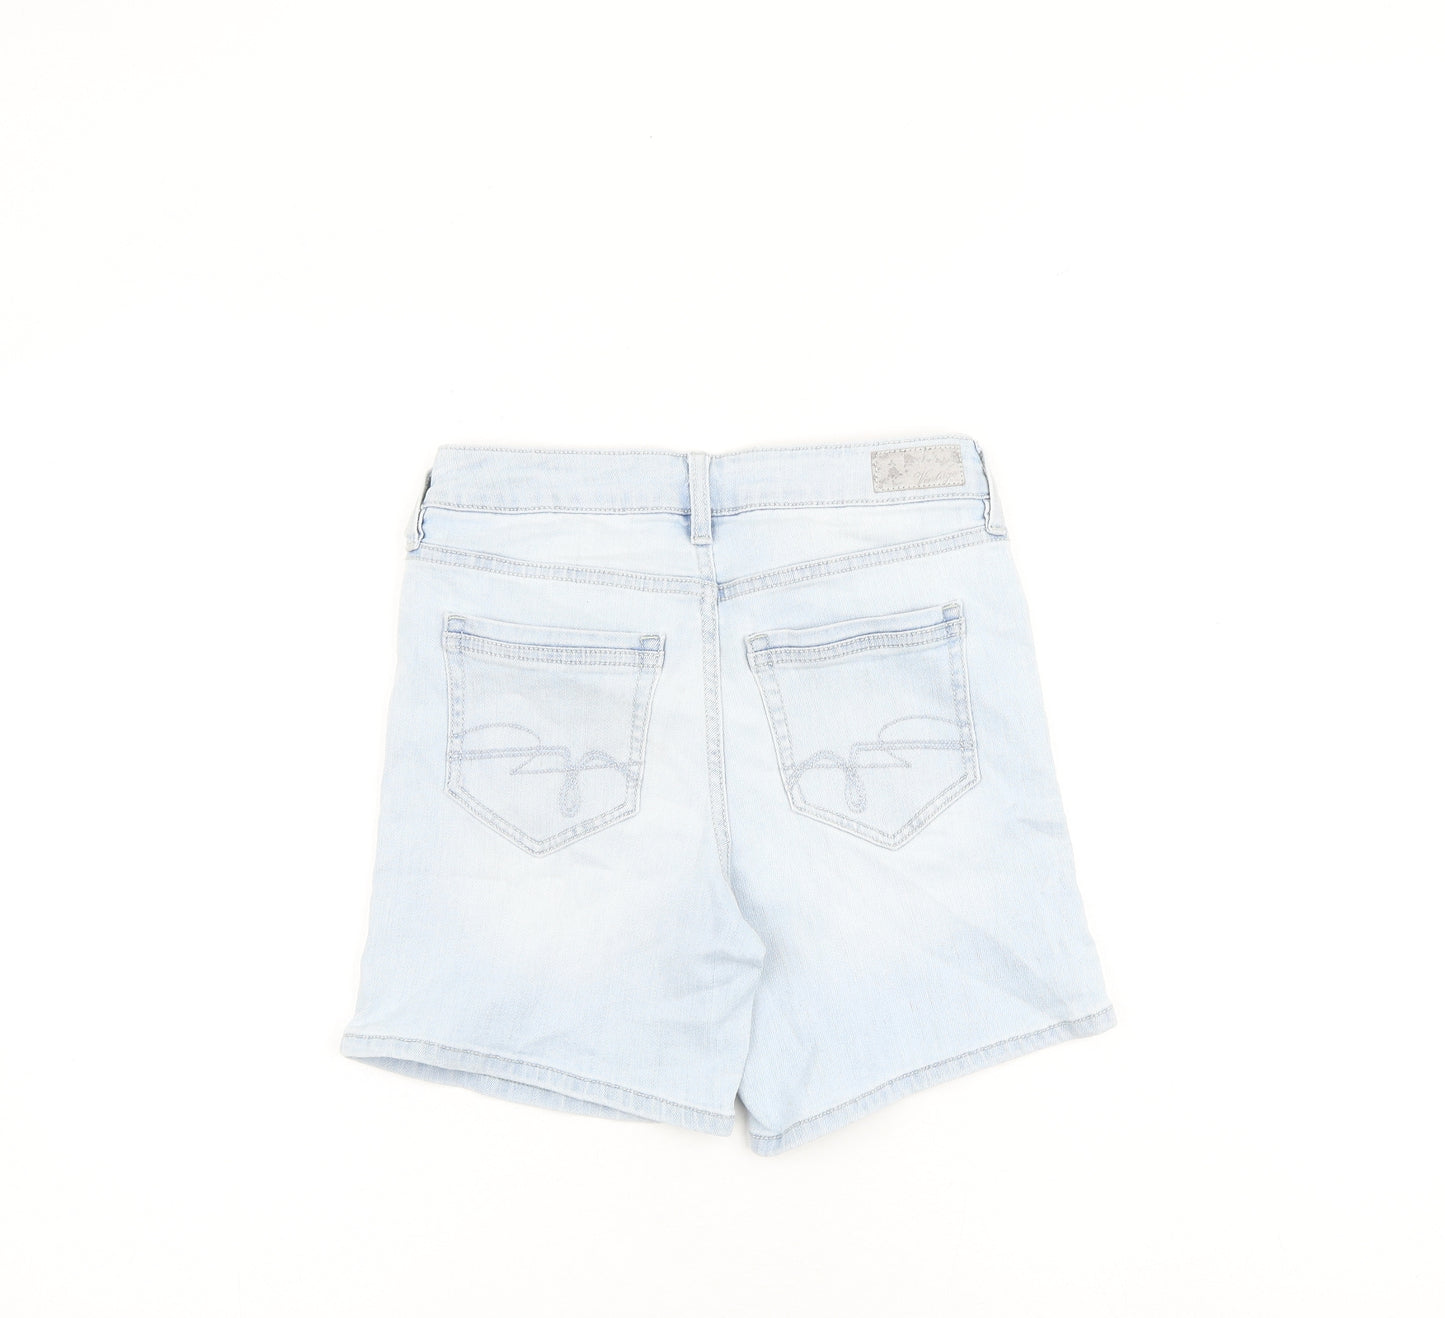 F&F Womens Blue Cotton Mom Shorts Size 8 L6 in Regular Zip